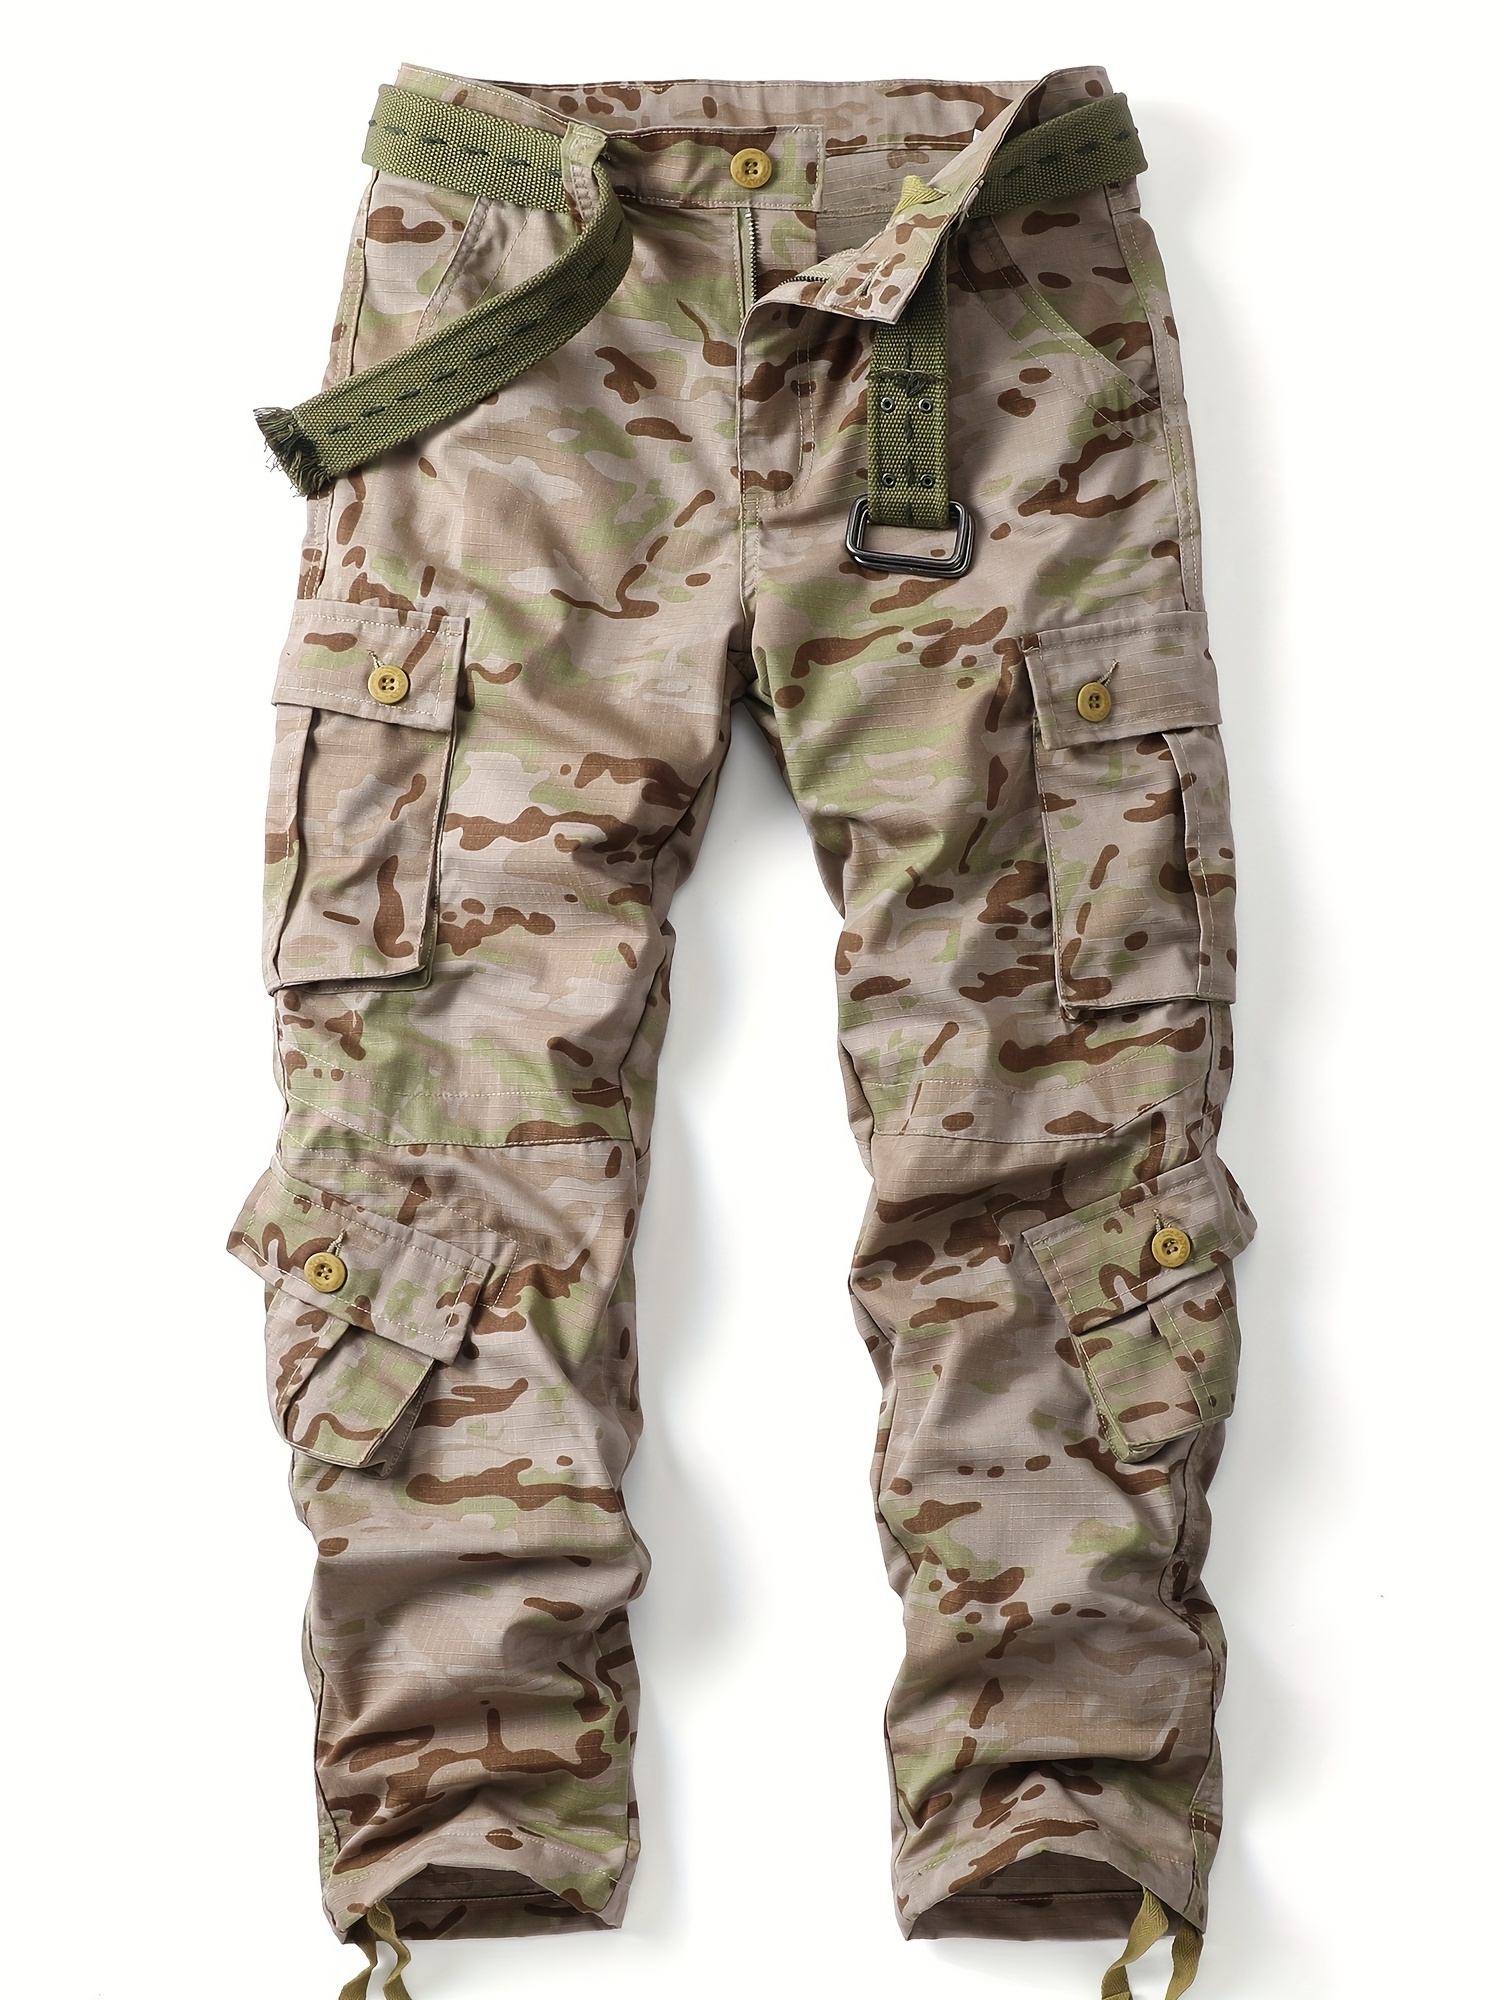 Toomett Men's Cargo Pants Casual Military Tactical Wild Combat